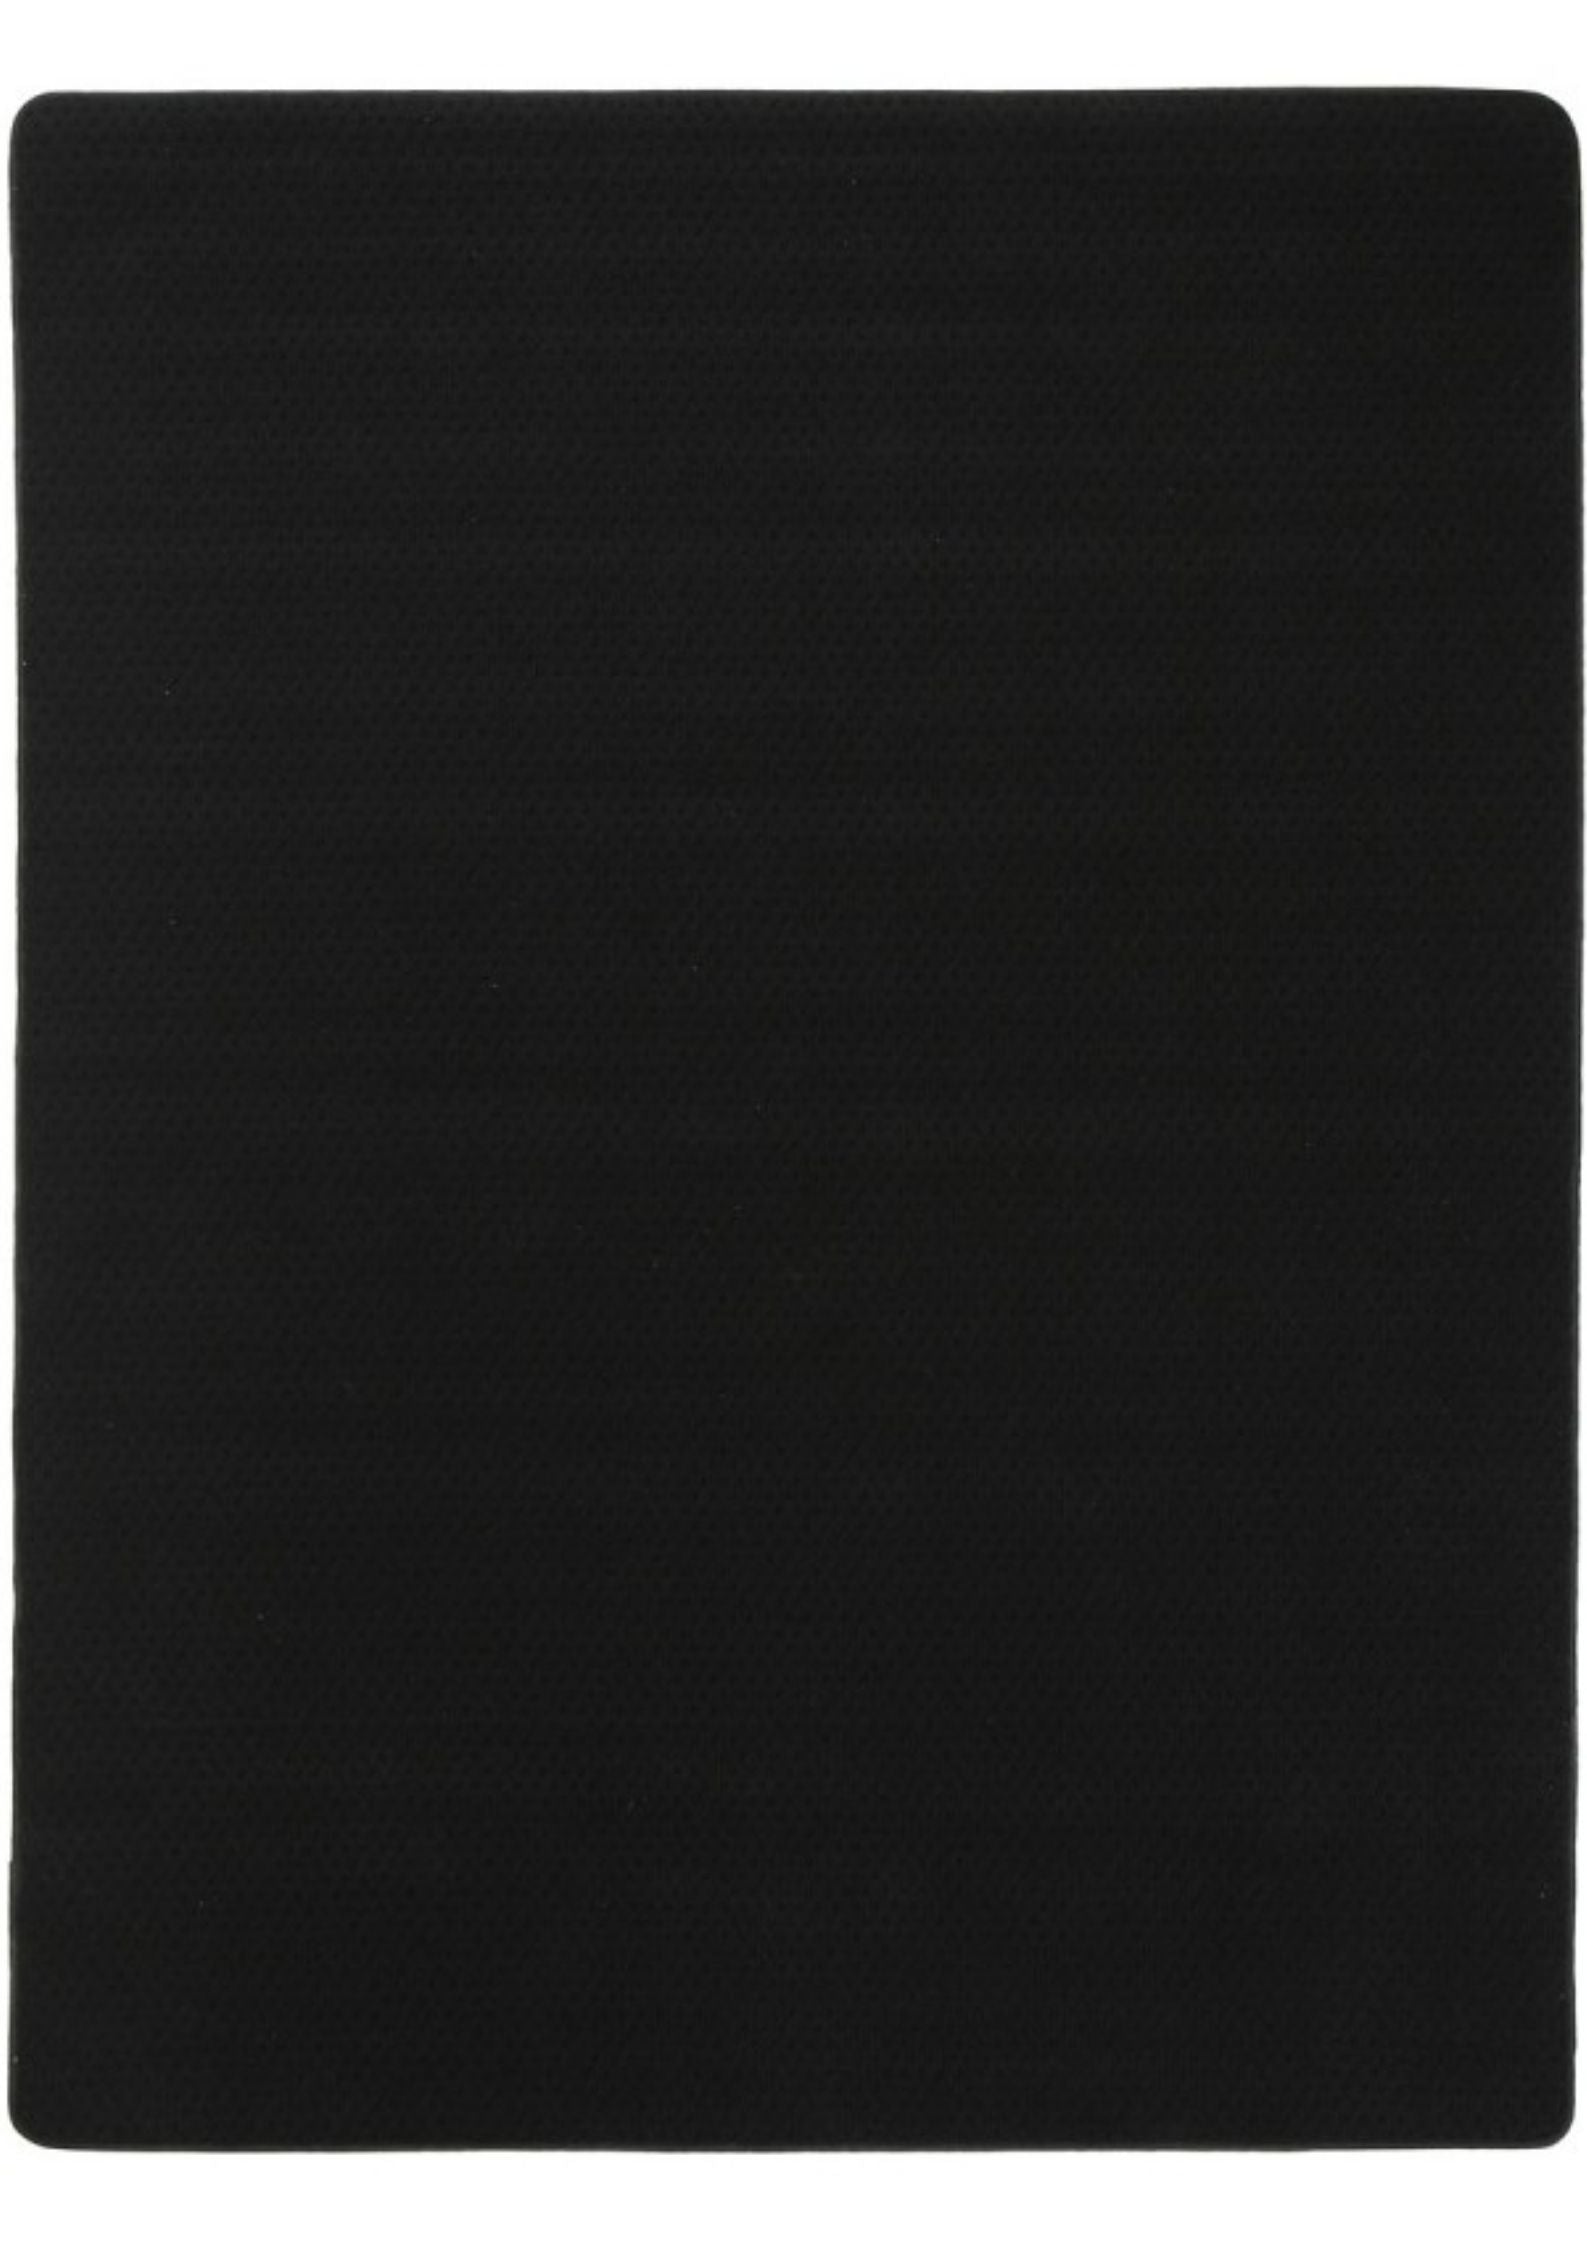 Pablo Black Non-Slip Rubber Back Rug - 200x280cm